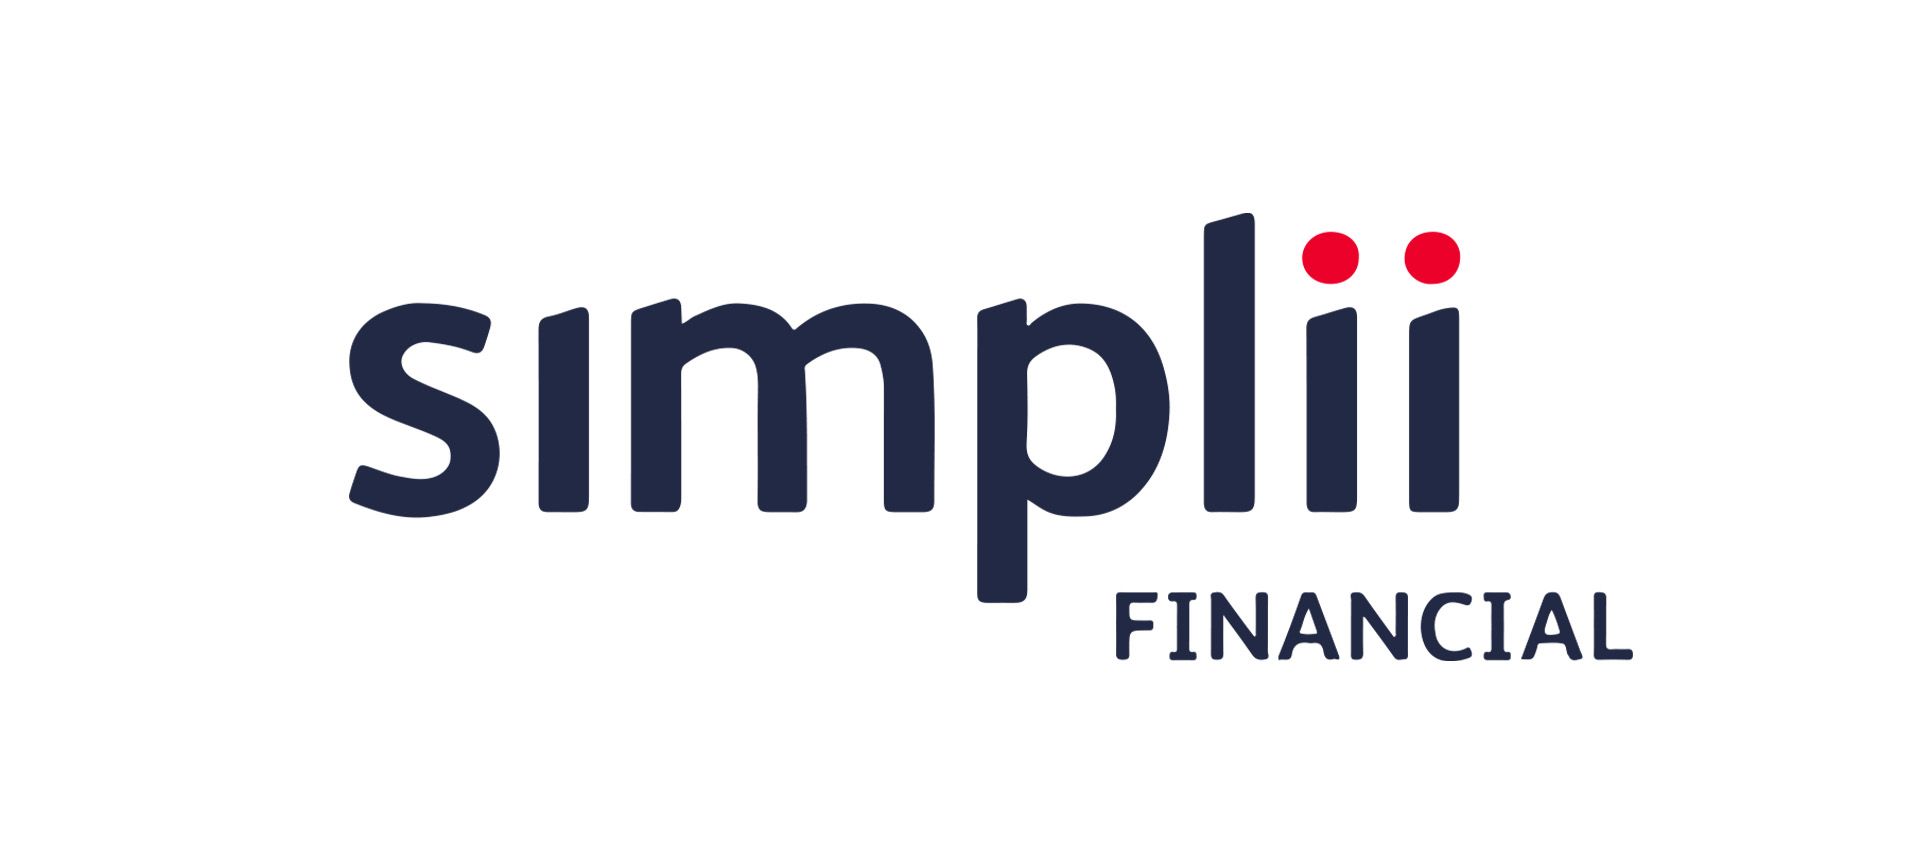 Simplii financial logo 